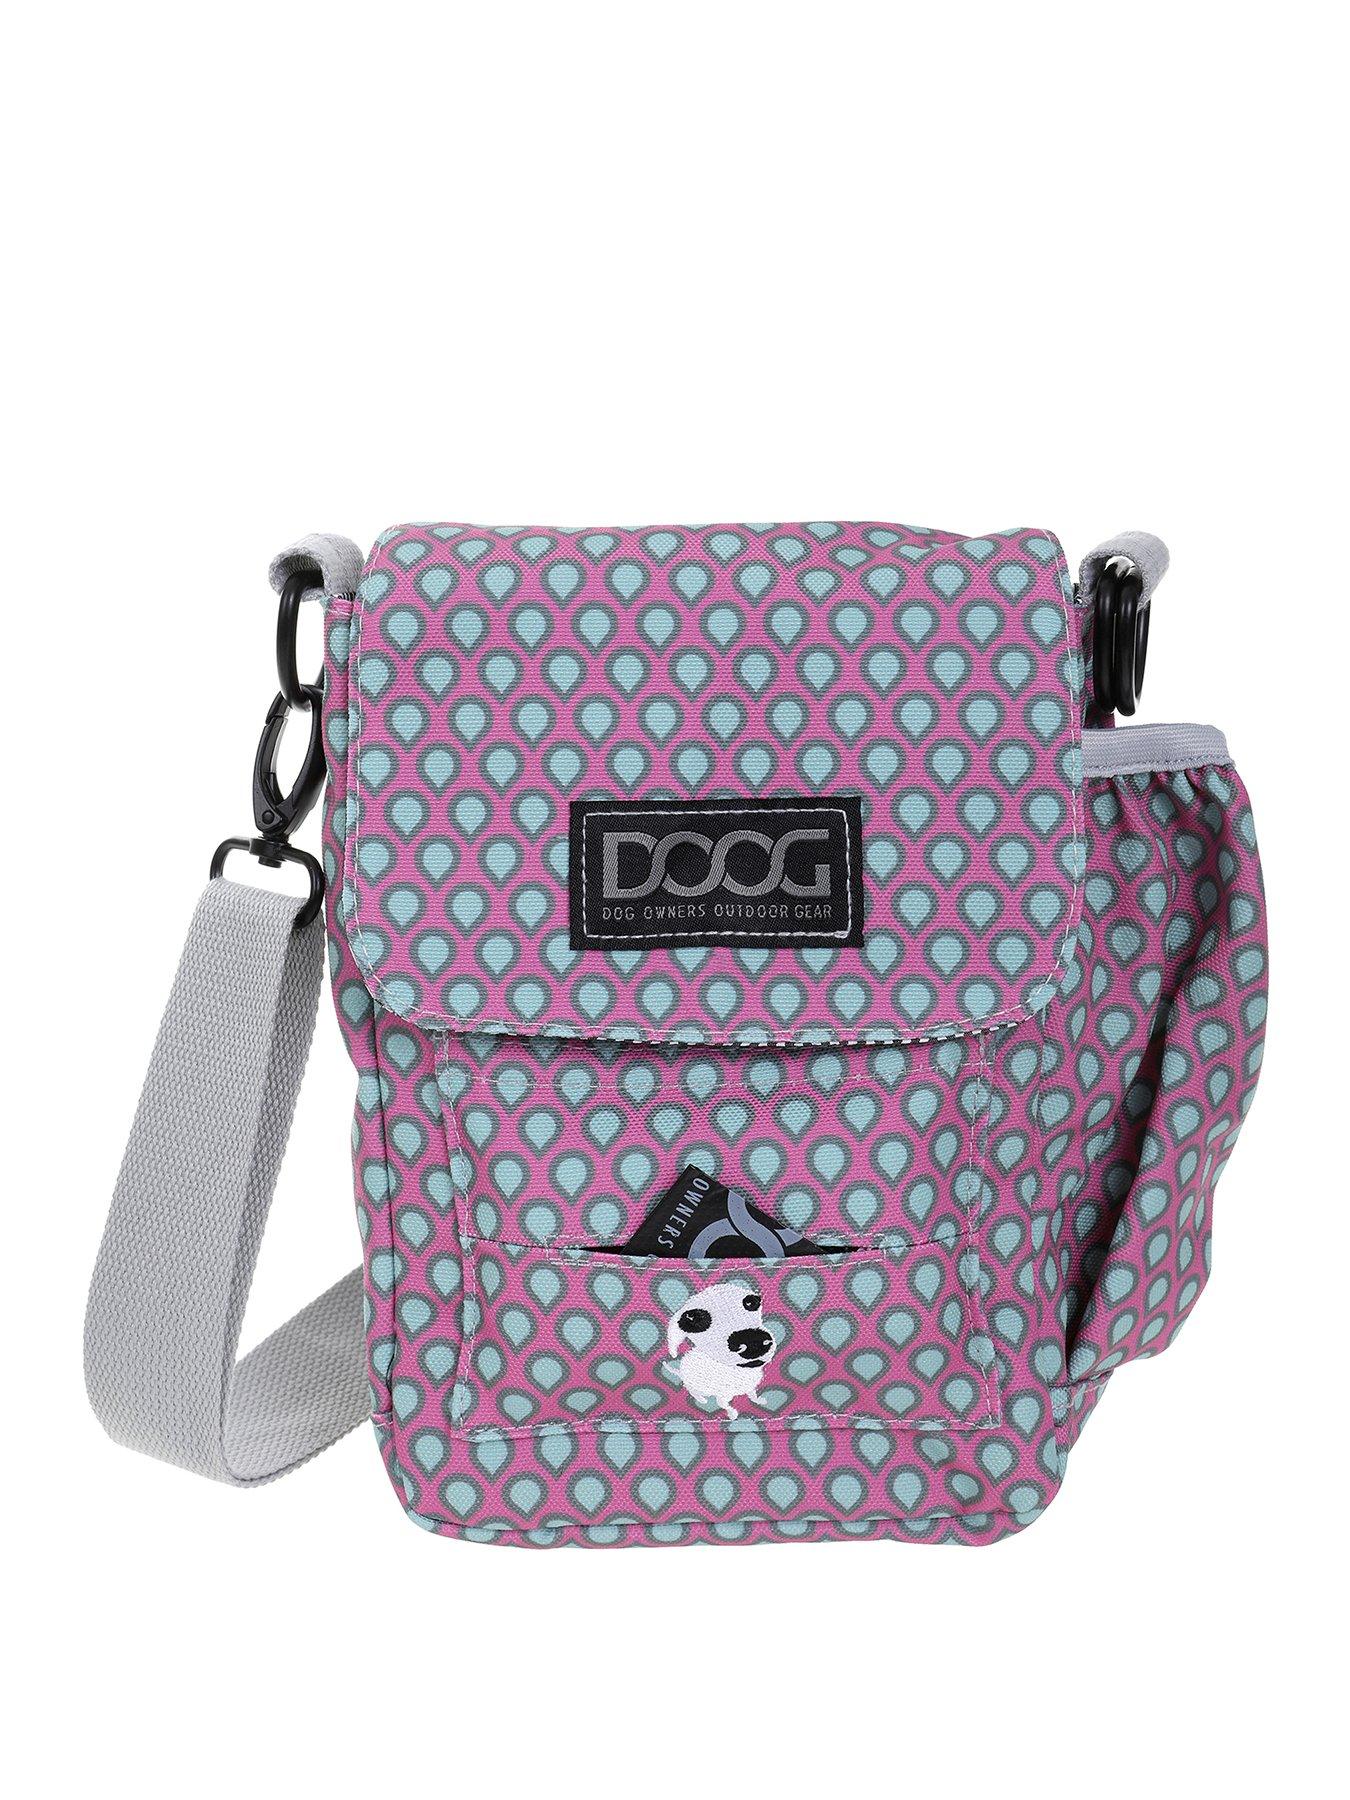 Product photograph of Doog Dog Walking Shoulder Bag from very.co.uk